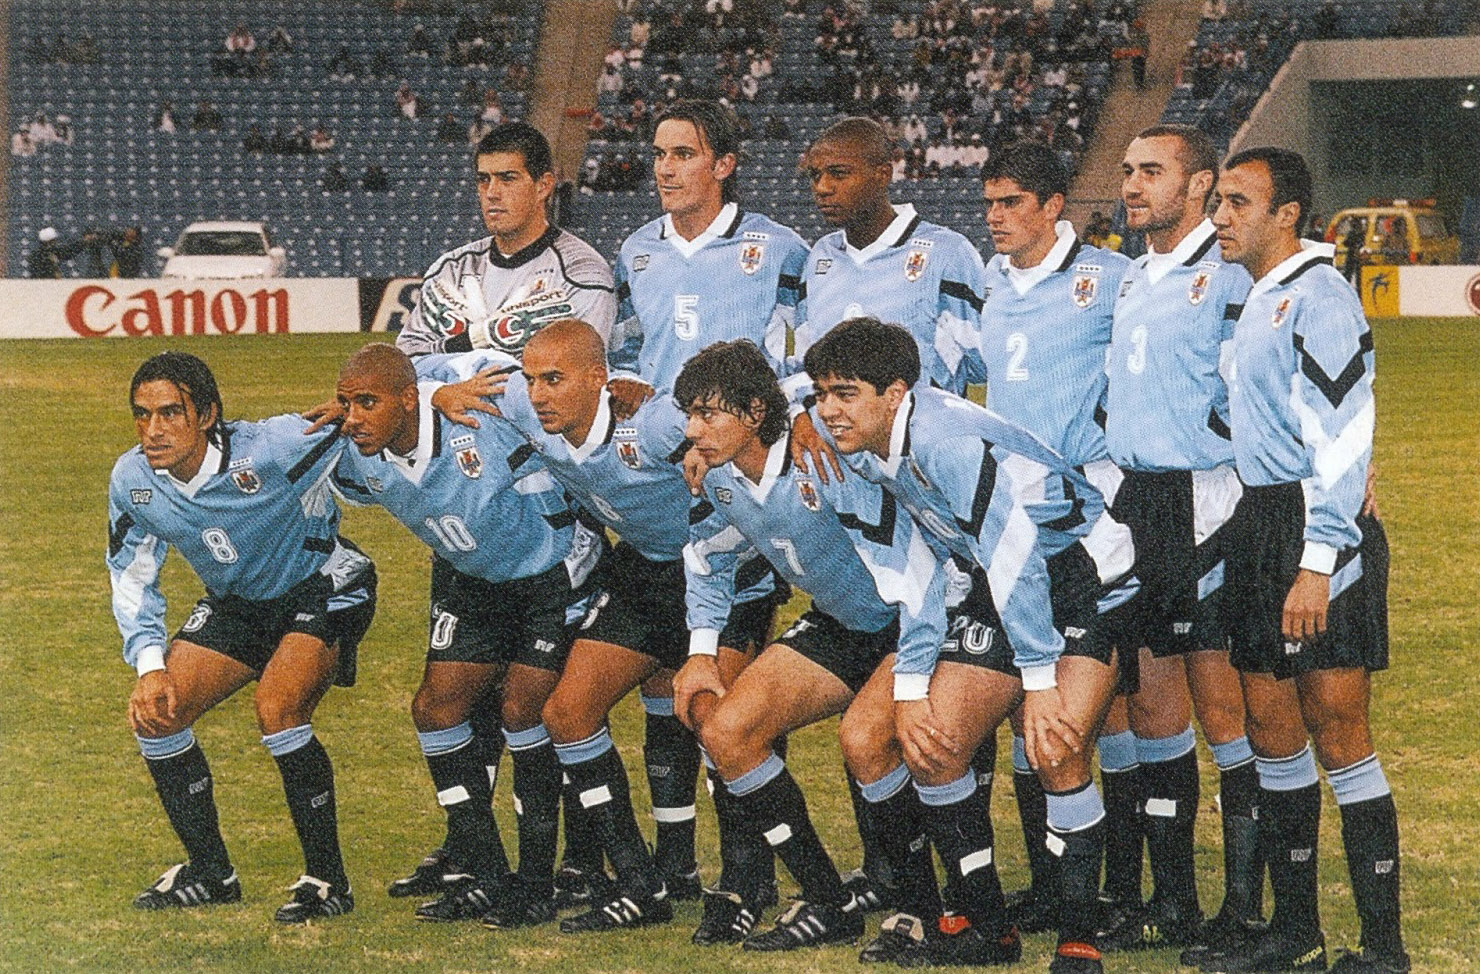 URUGUAY 1997 12 19 l10 vs australia sf copa confederaciones EN ARABIA           SAUDI.jpg